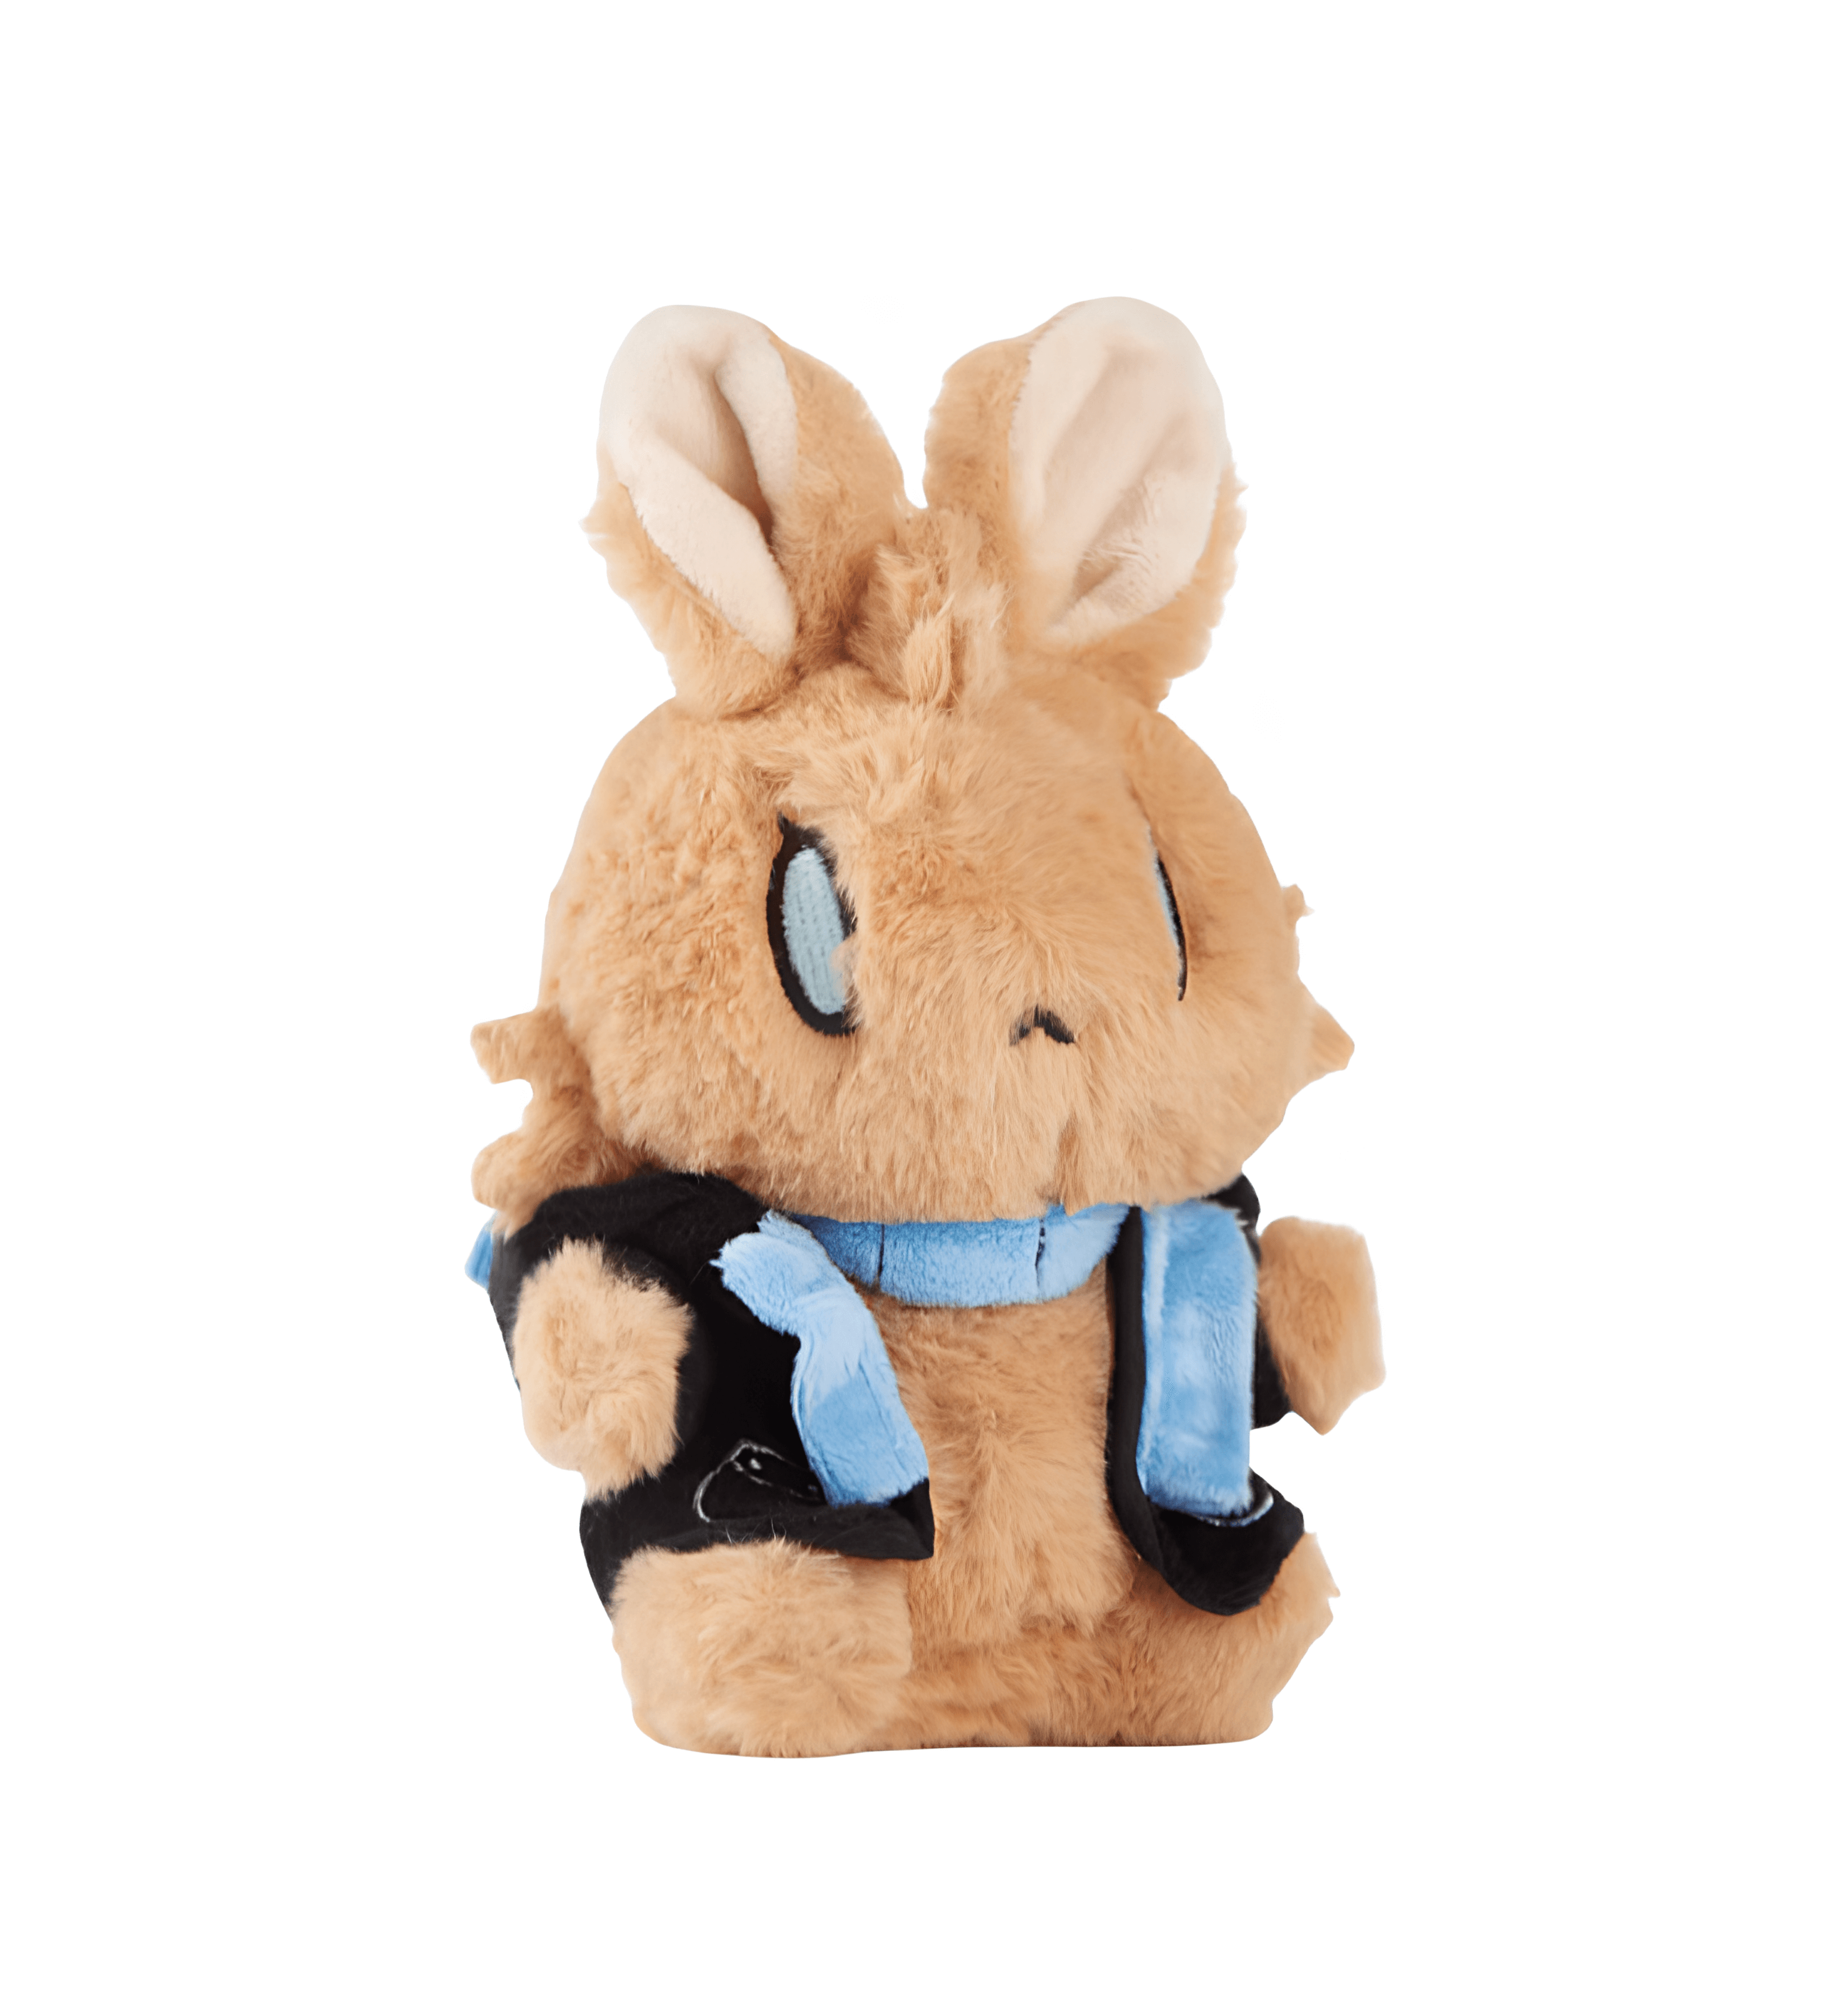 Arknights Amiya Rabbit plush toy